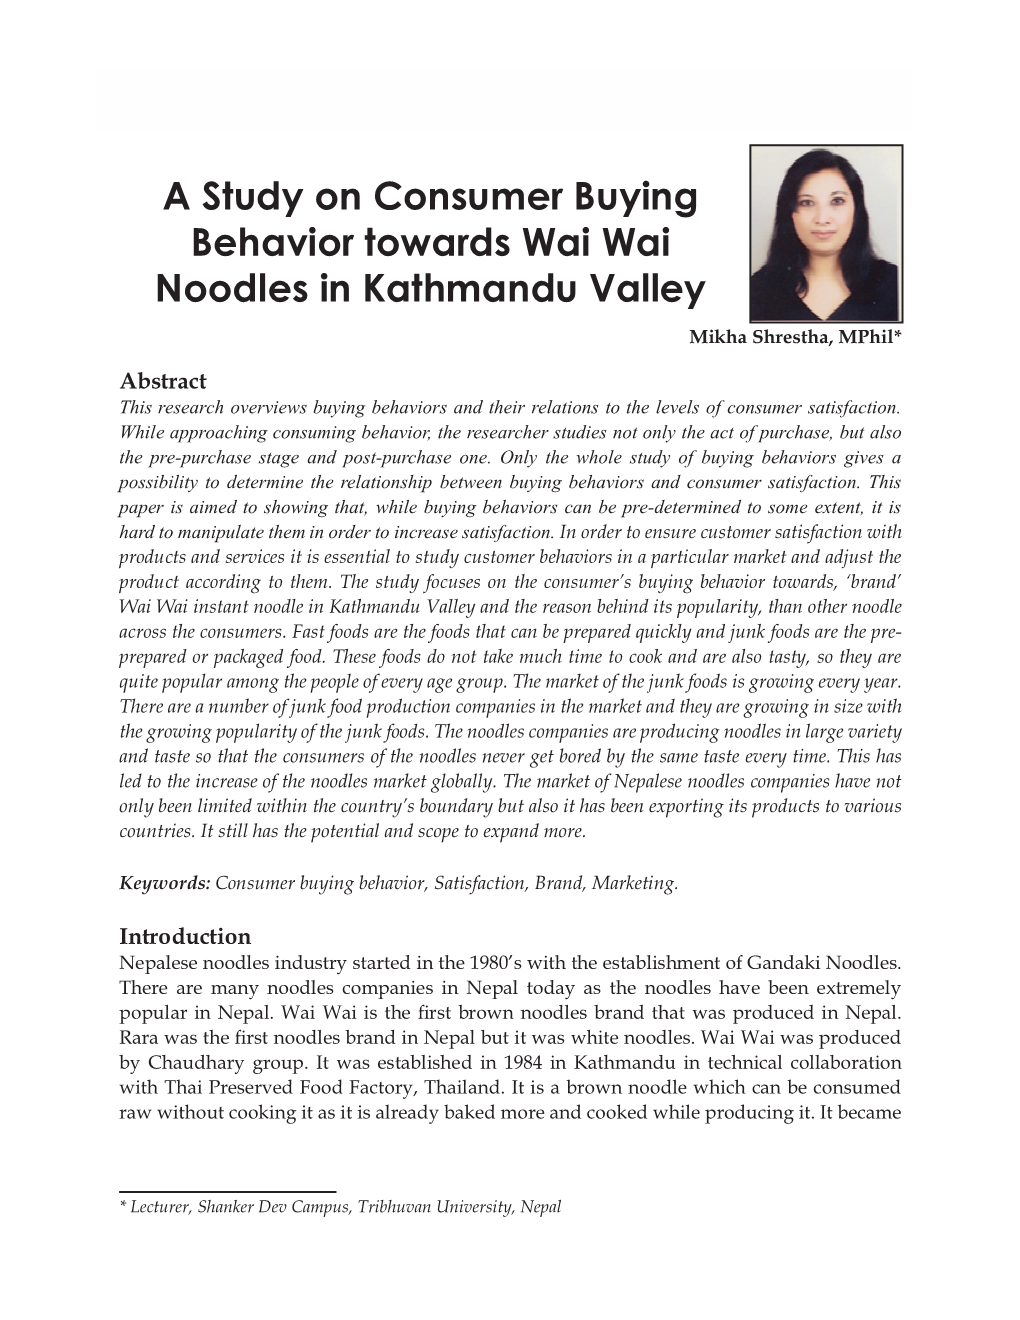 A Study on Consumer Buying Behavior Towards Wai Wai Noodles in Kathmandu Valley 